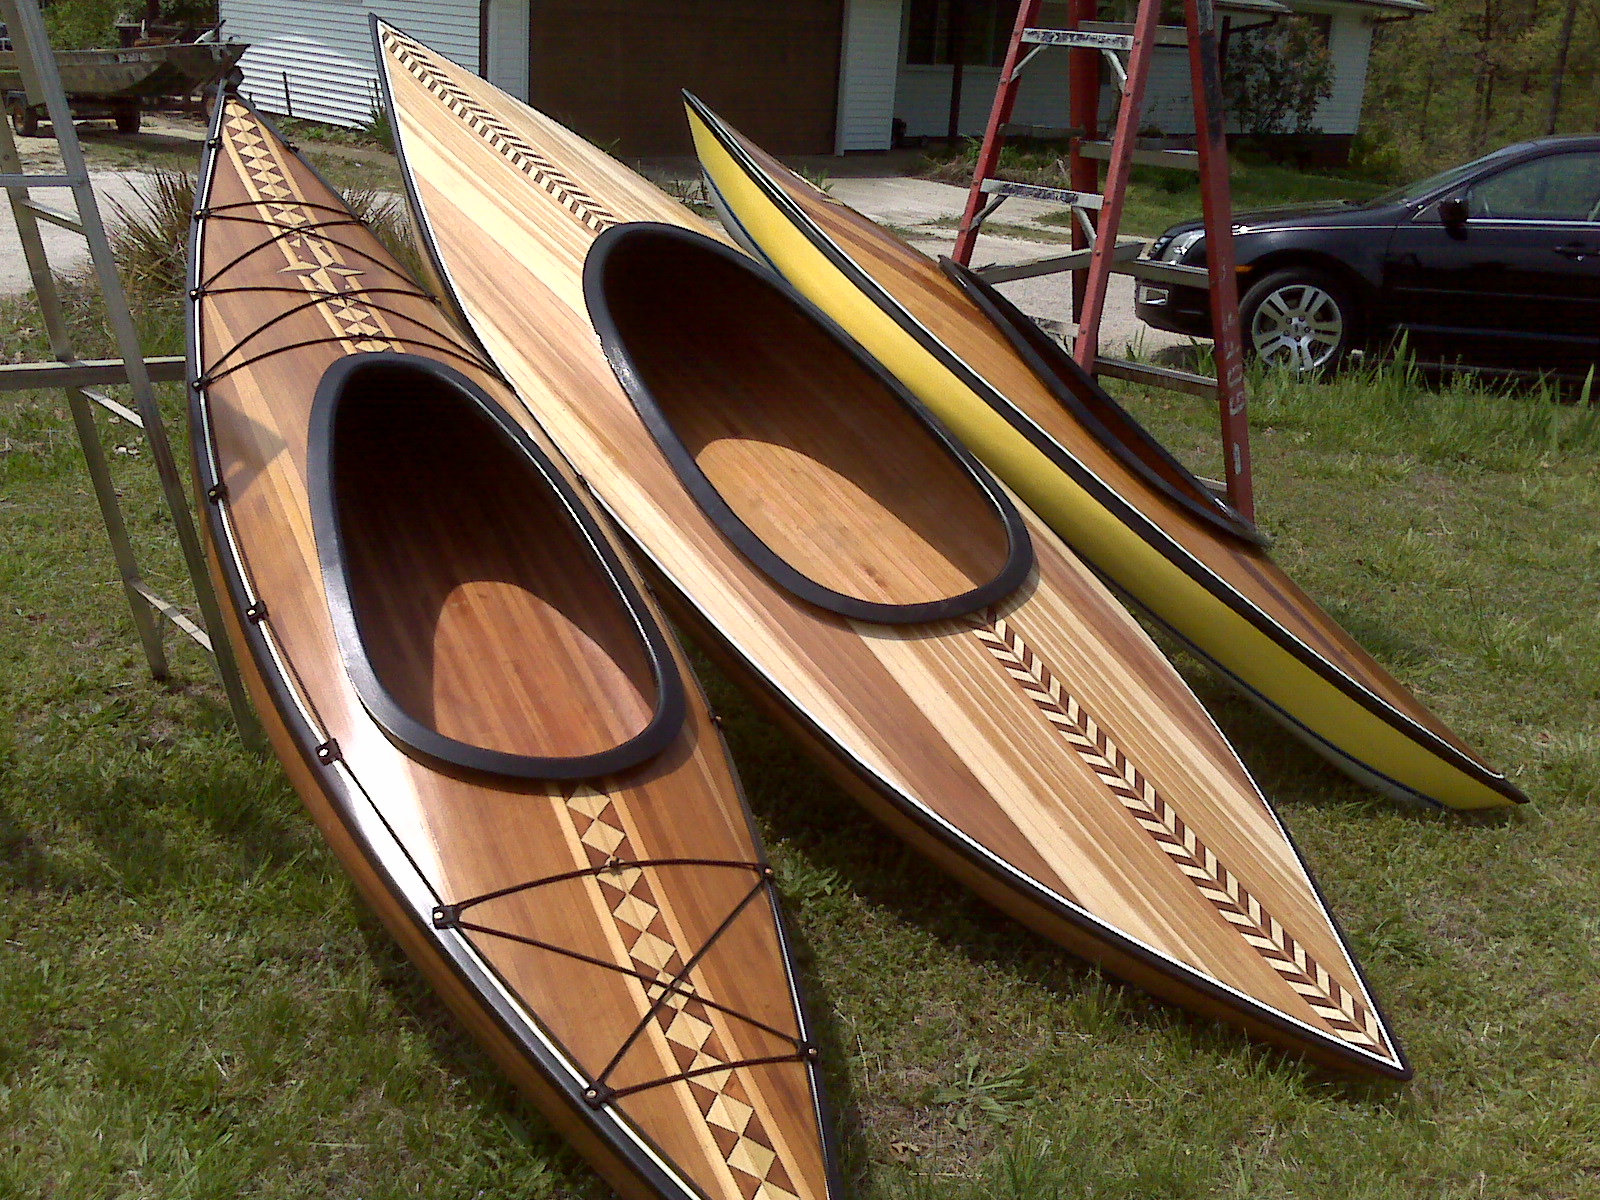 Strip Built Kayak Tandem faithbookjr